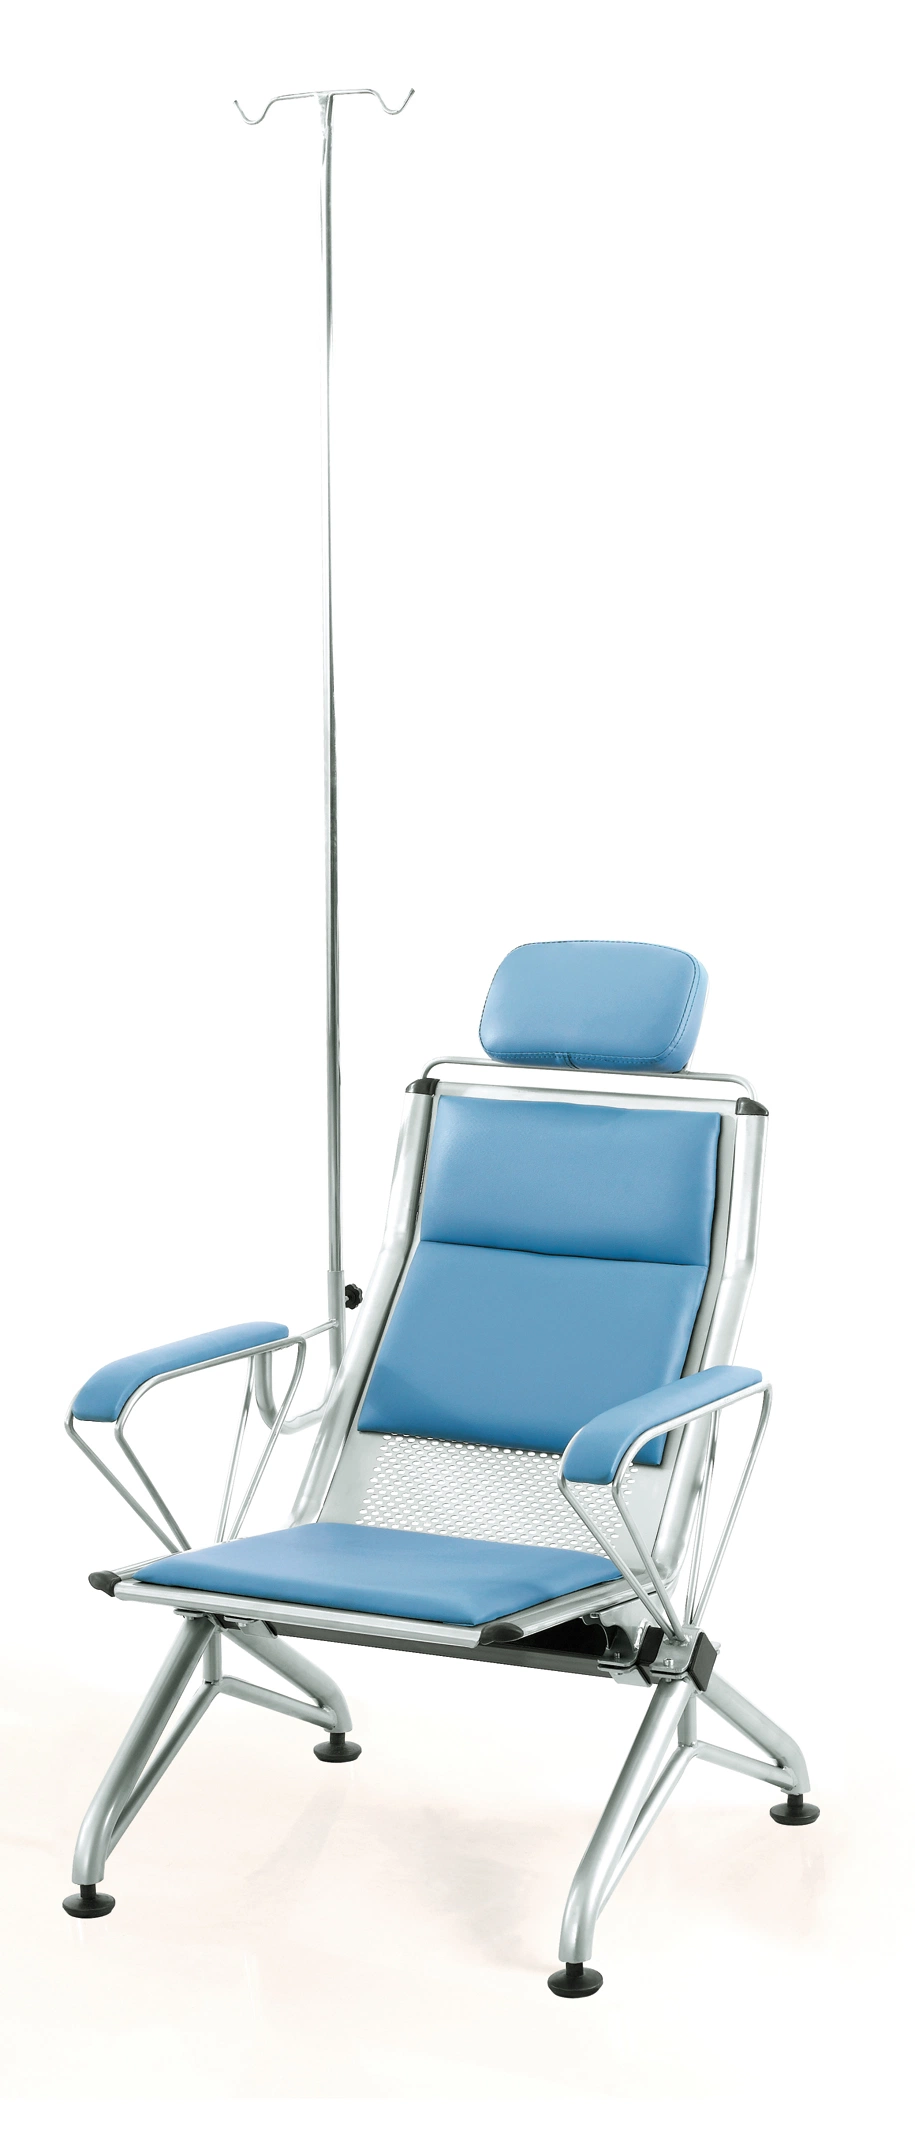 Metal Steel Hospital Furniture Medical Equipment Hospital Medical Office Waiting Room Chairs